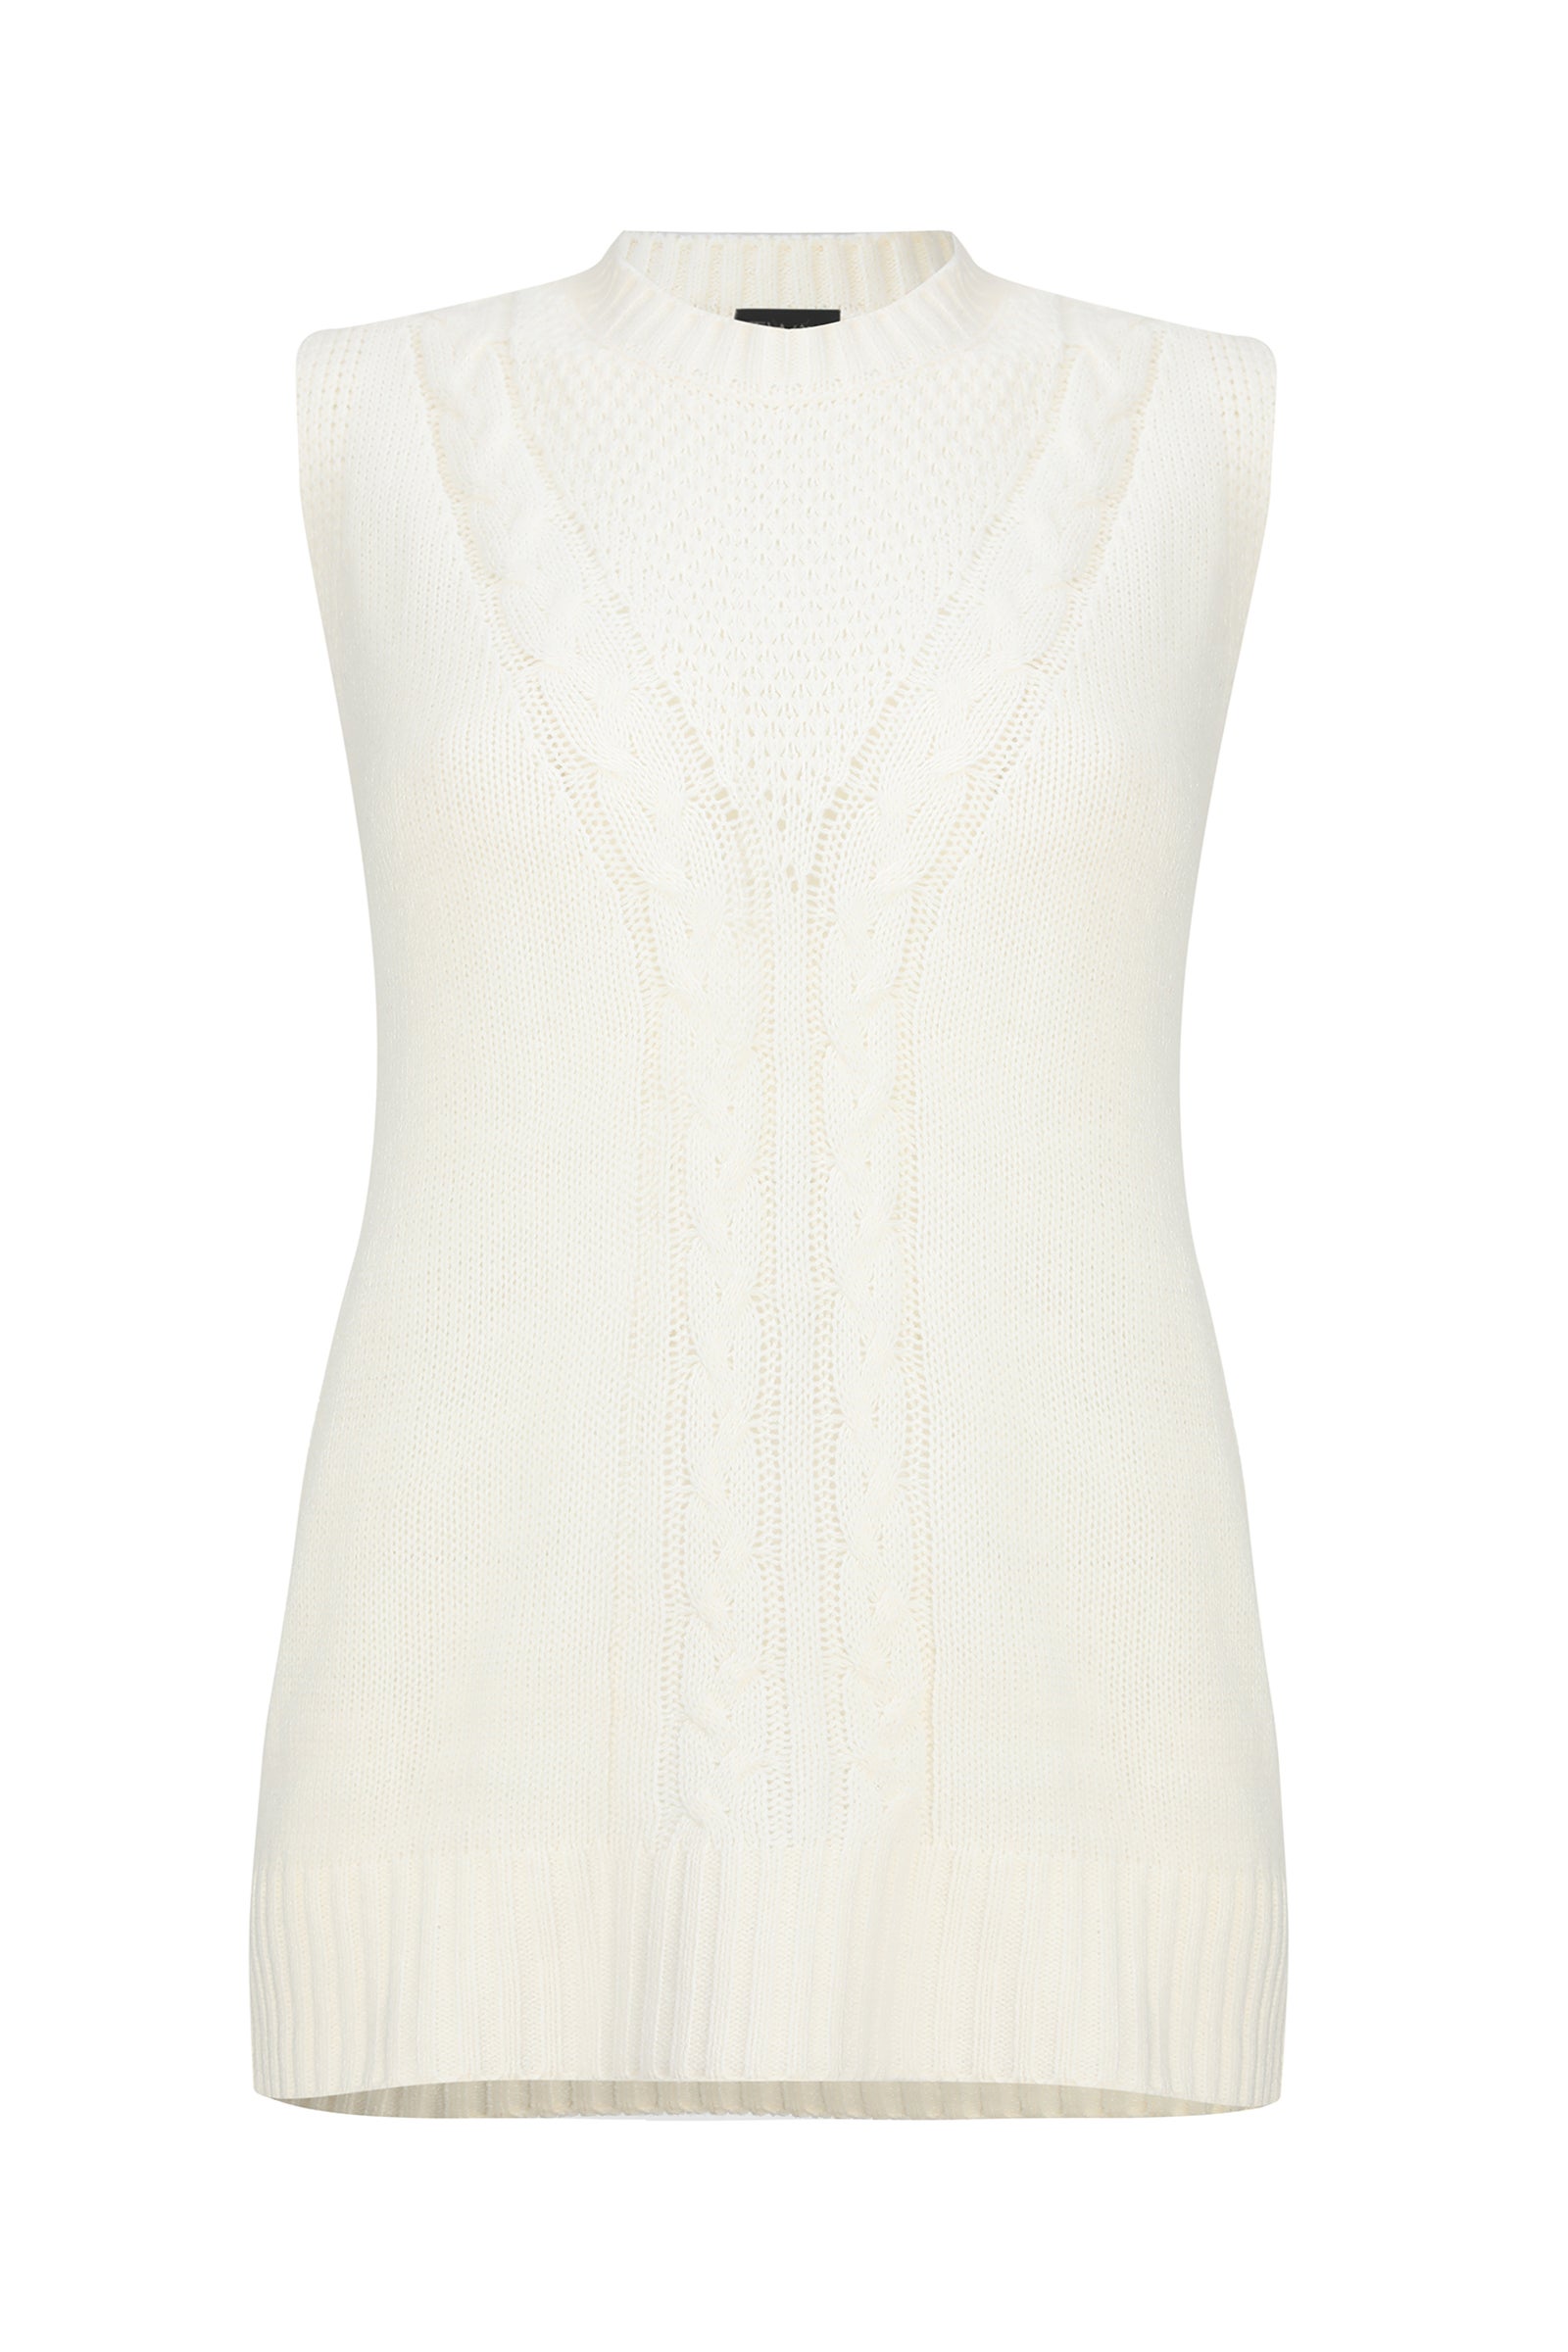 Acrylic Rib Knitwear Vest in Off White | Caroline Eve